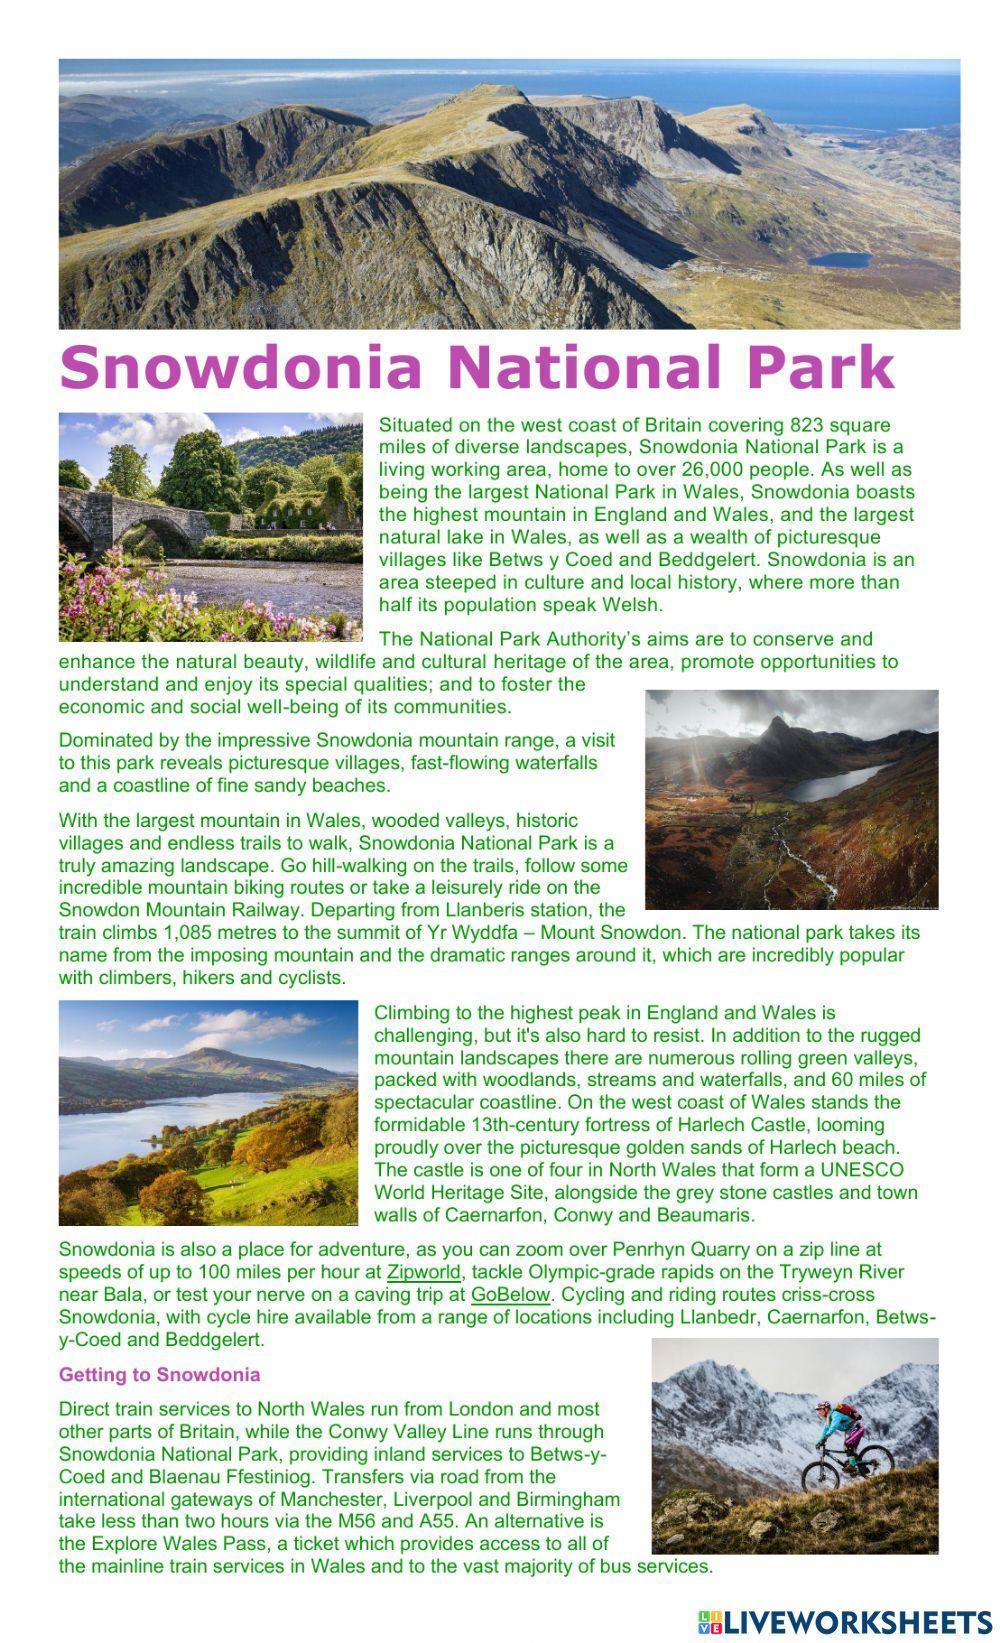 Snowdonia National Park, Wales